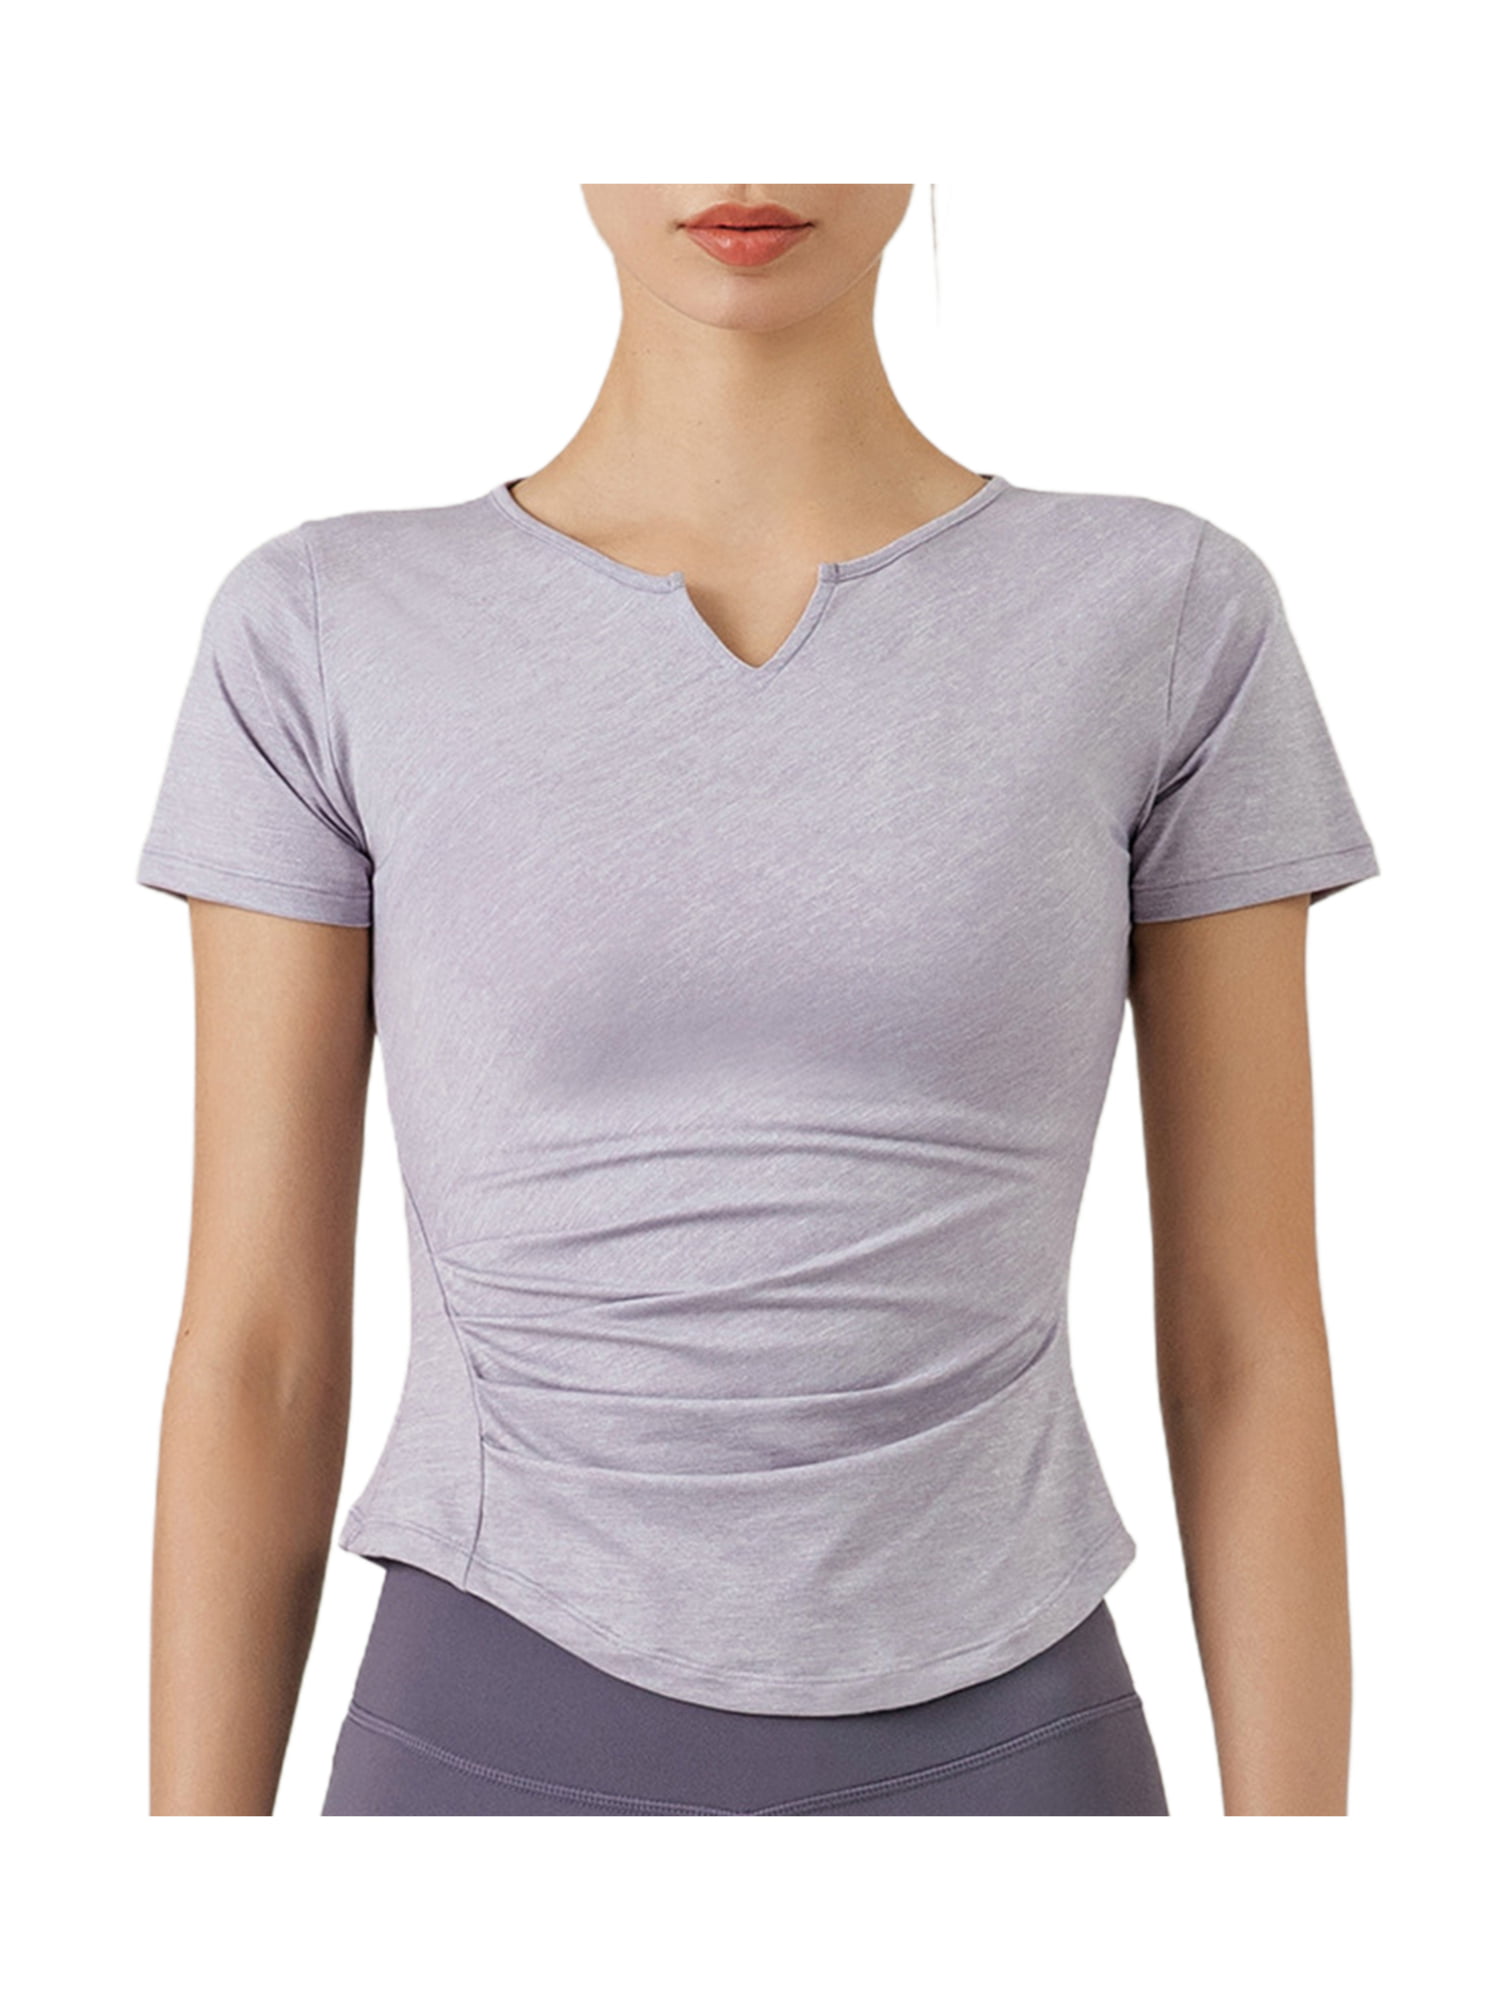 Genuiskids Women Sports T-Shirt Quick Dry Solid Color Short Sleeve Tee Tops Workout Gym Sports T-shirt - Walmart.com